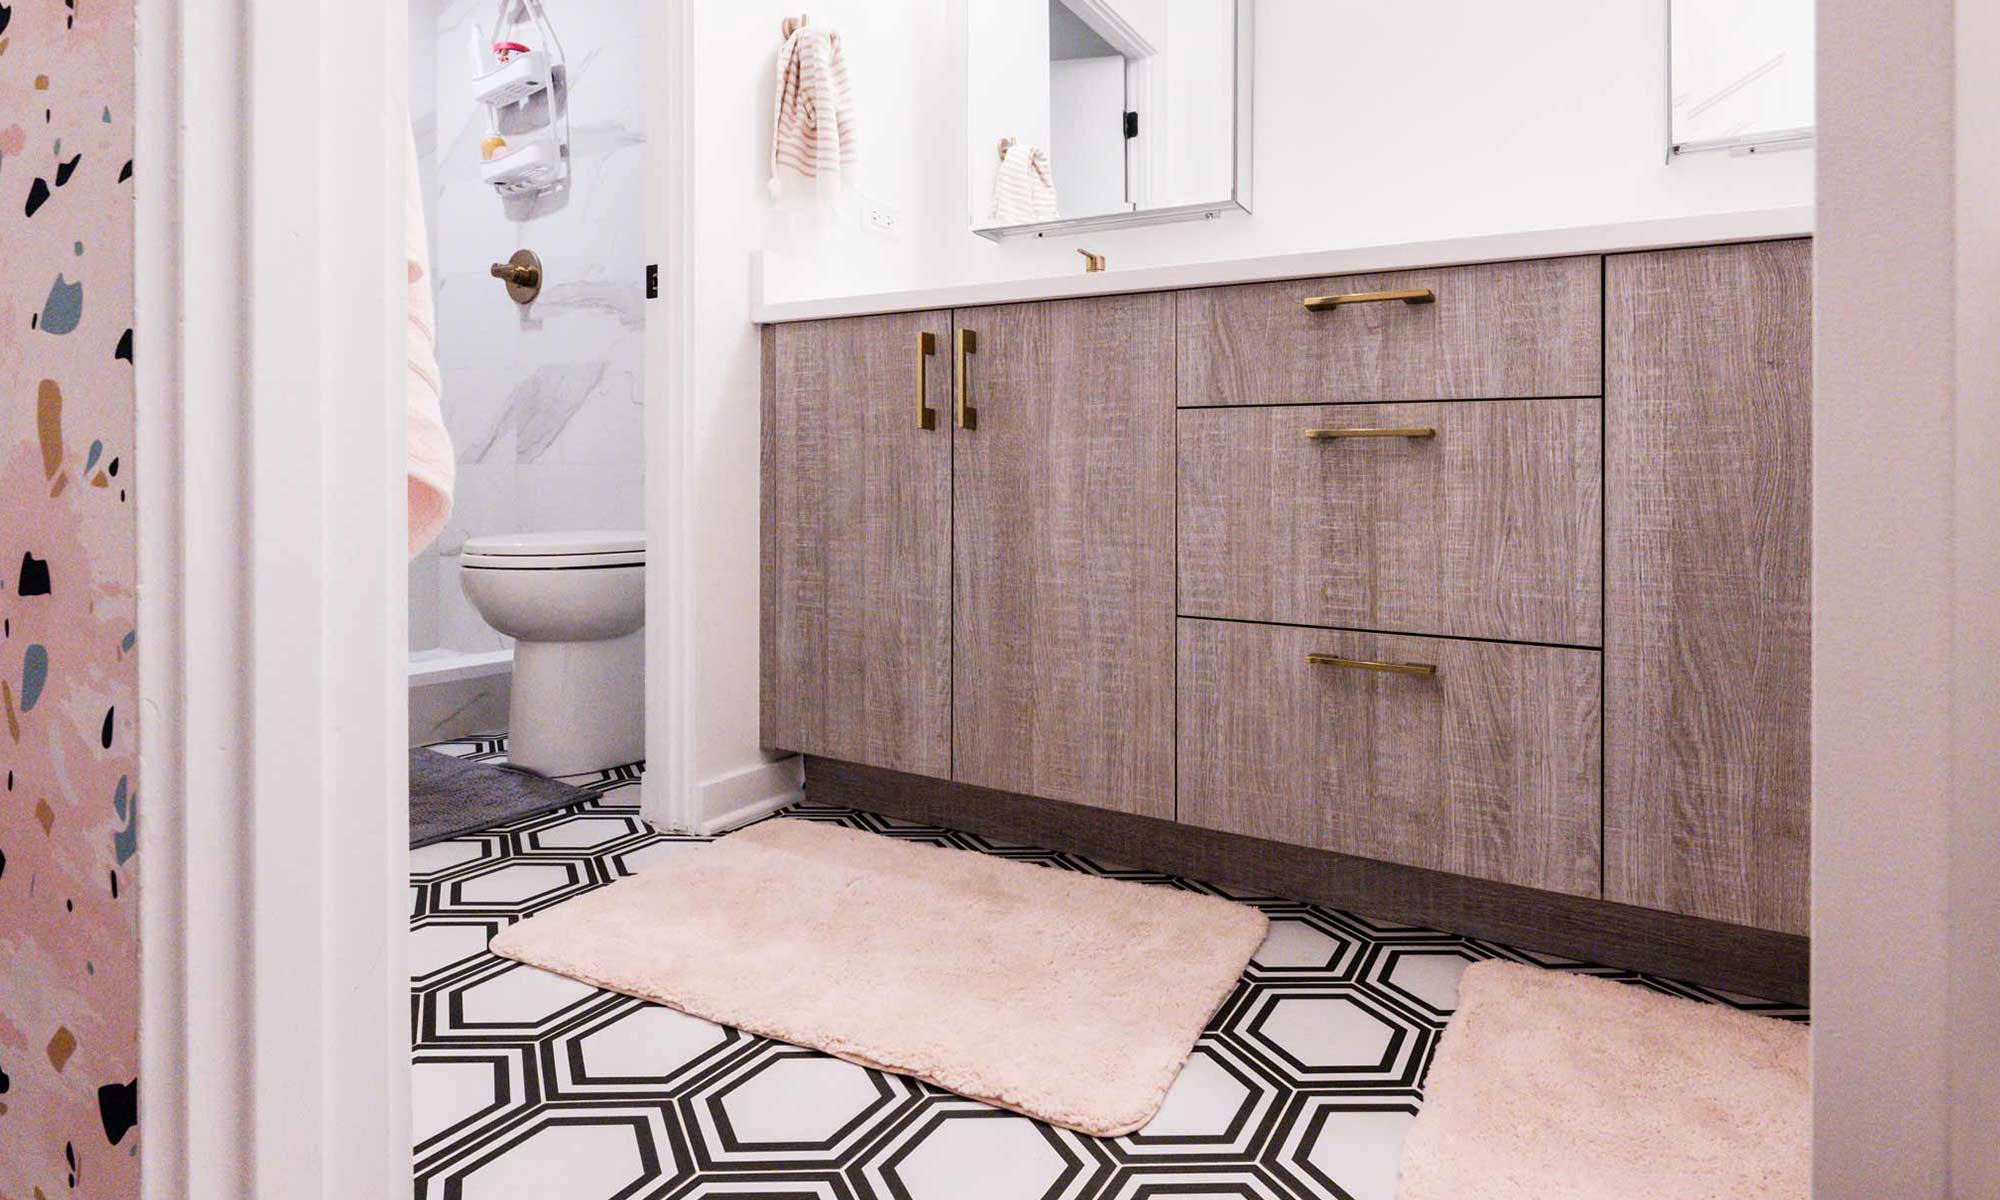 hexagon patterned tile in mcm bathroom remodel